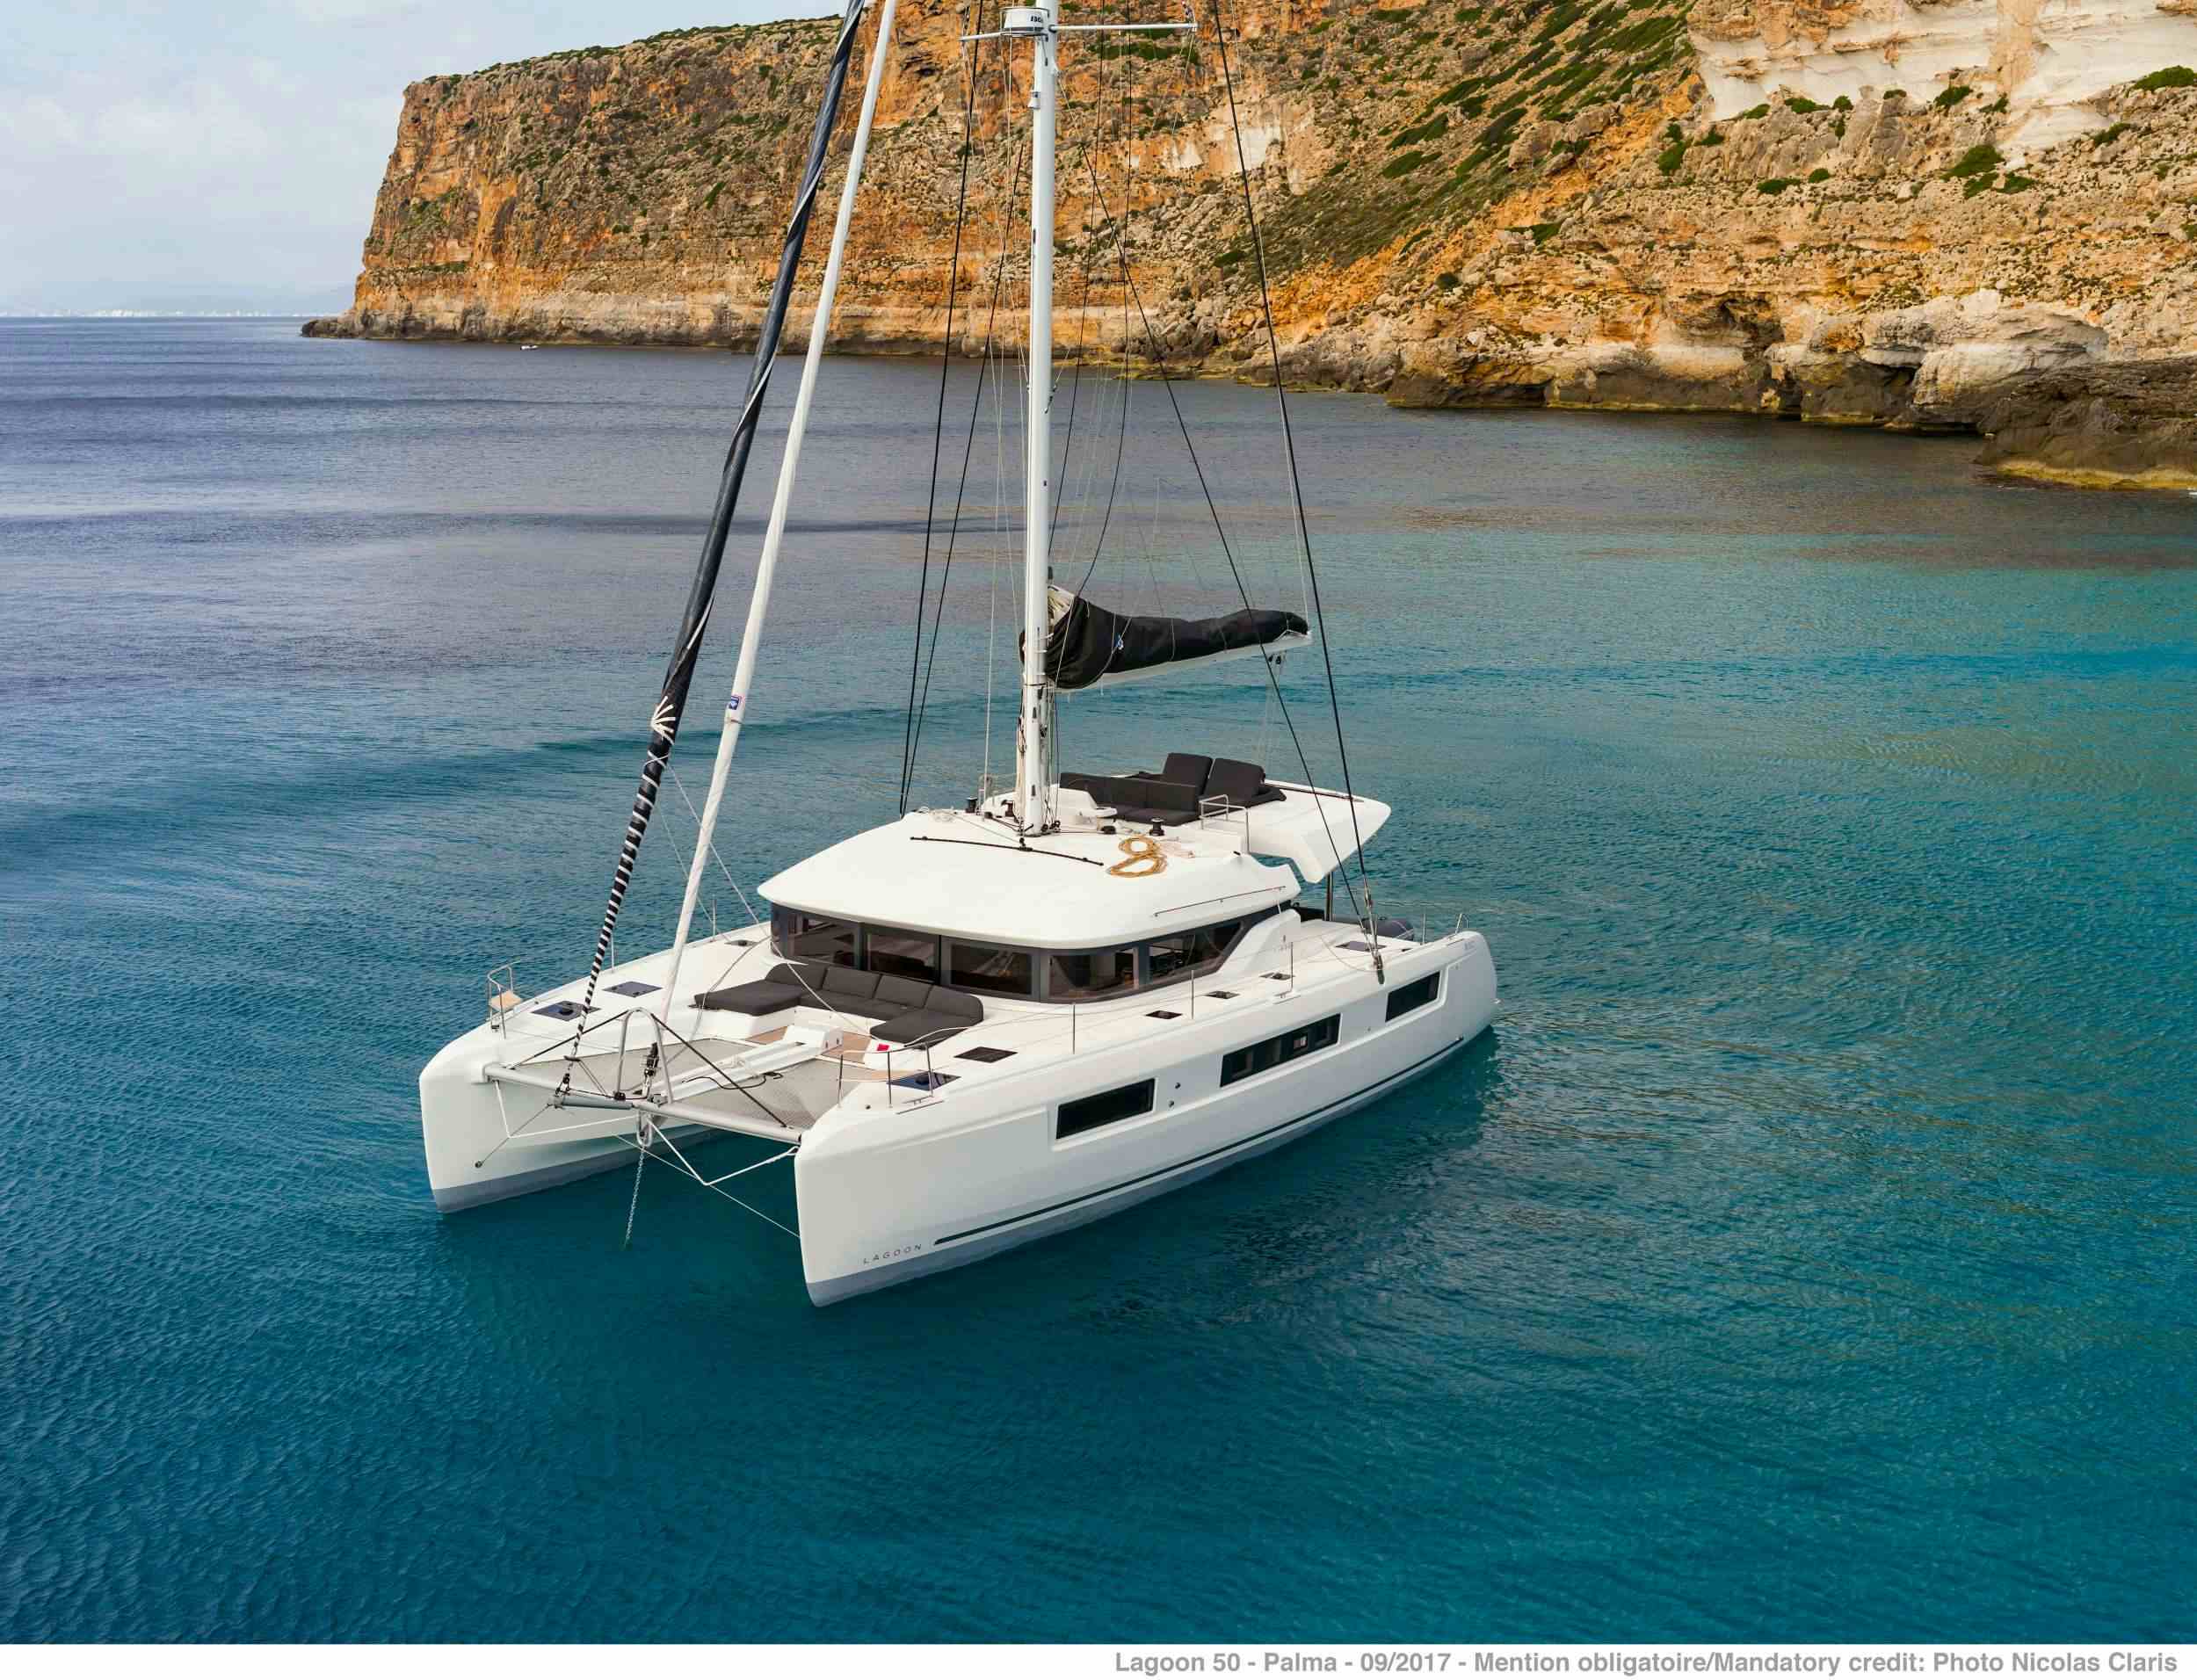 ONEIDA 2 - Yacht Charter Rhodes & Boat hire in Greece 1